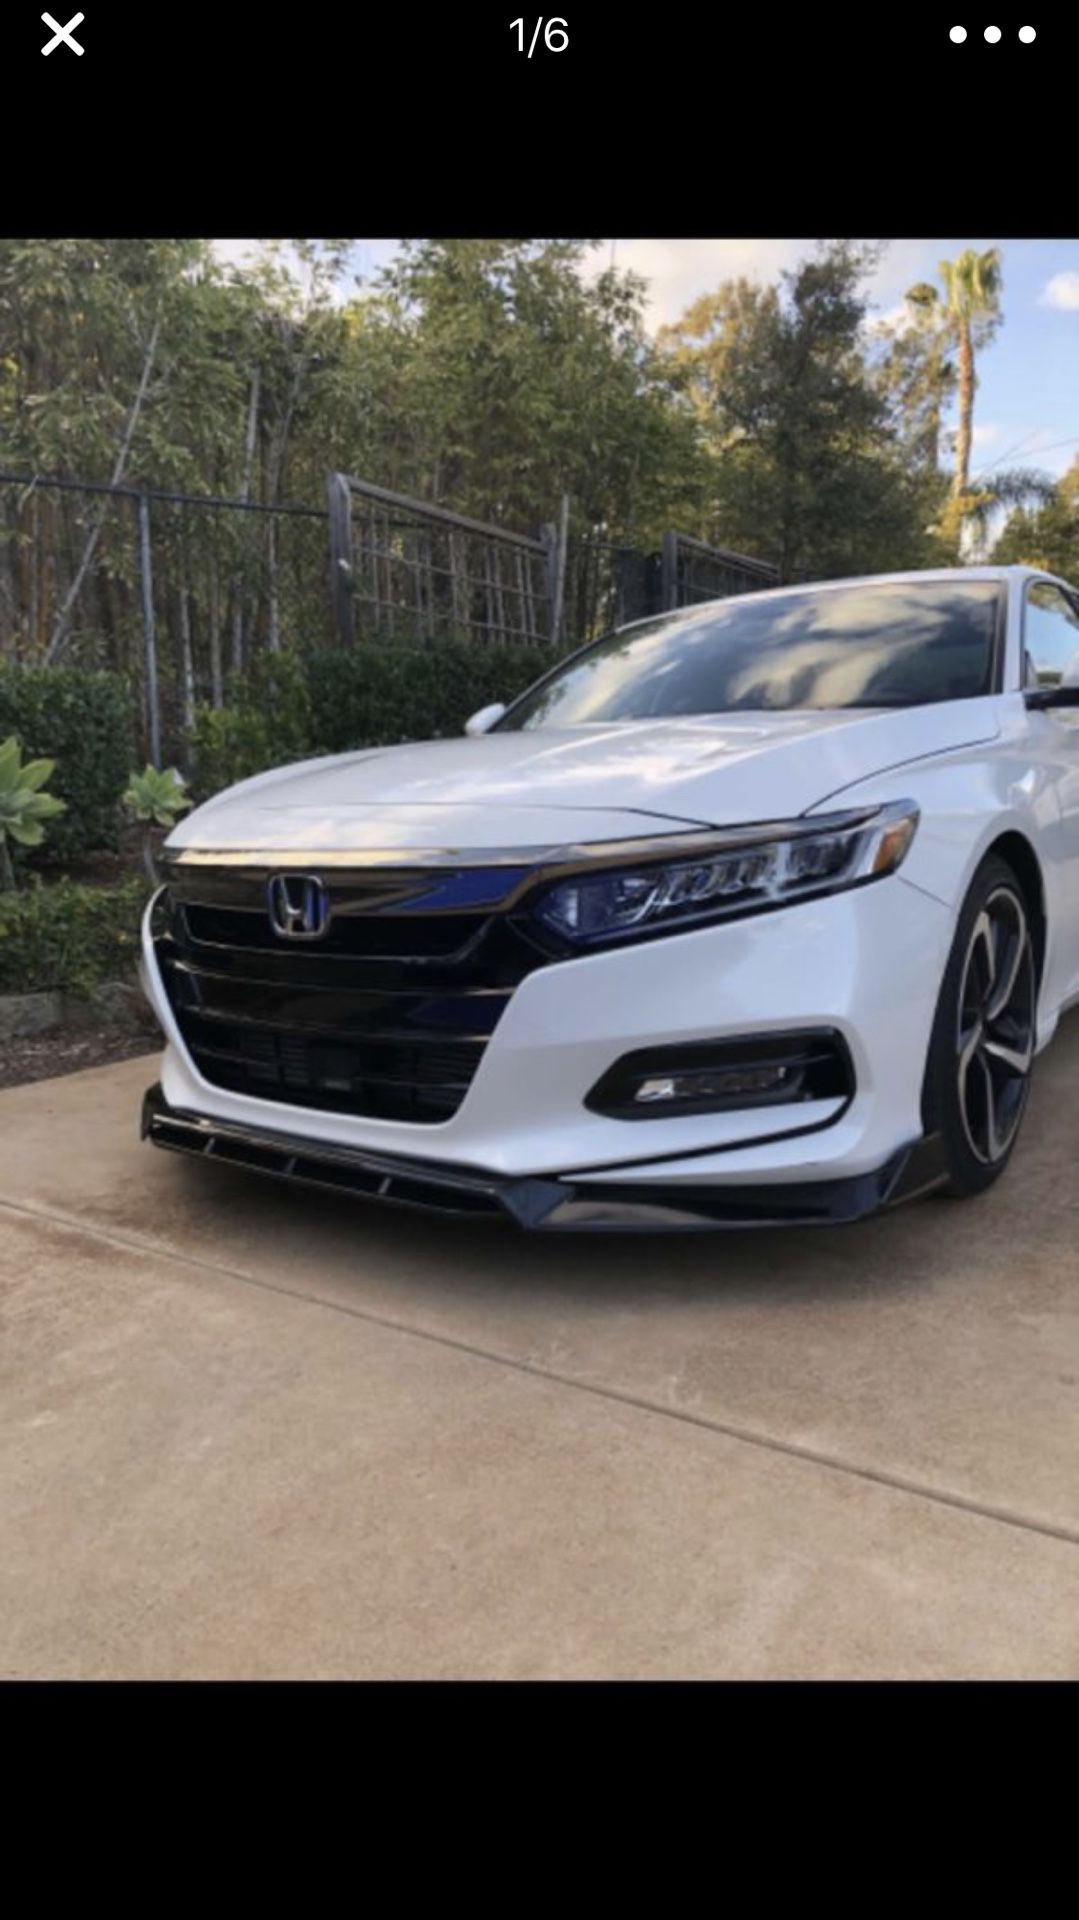 New Honda Accord front lip years 2019-2018